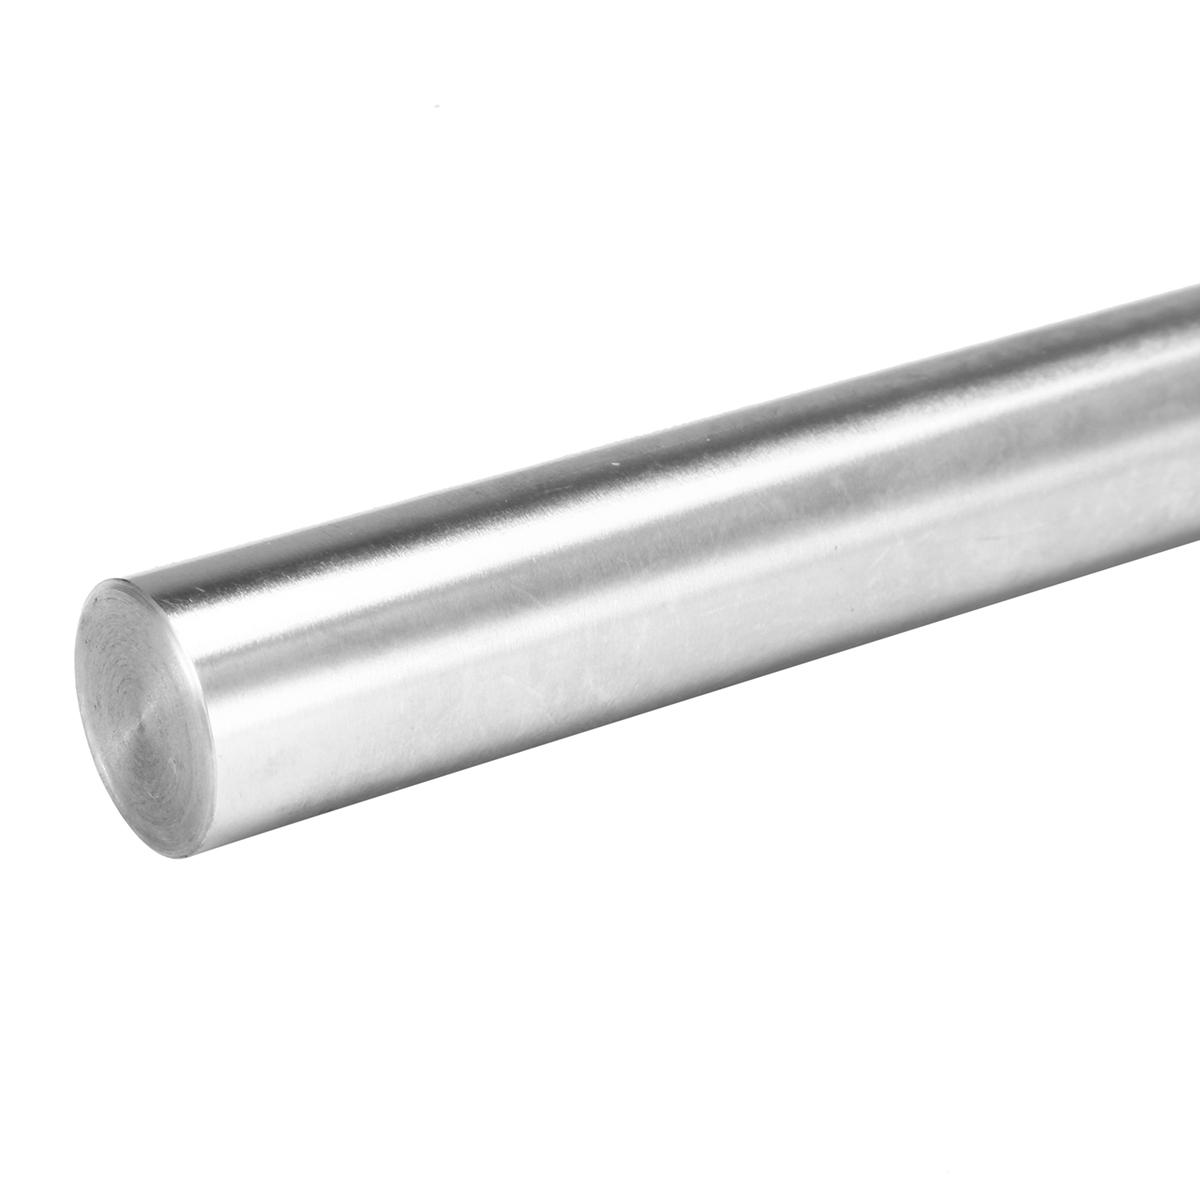 6mm/12mm 300mm Length Axis Chromed Smooth Rod Steel Linear Rail Shaft for 3D Printer 7